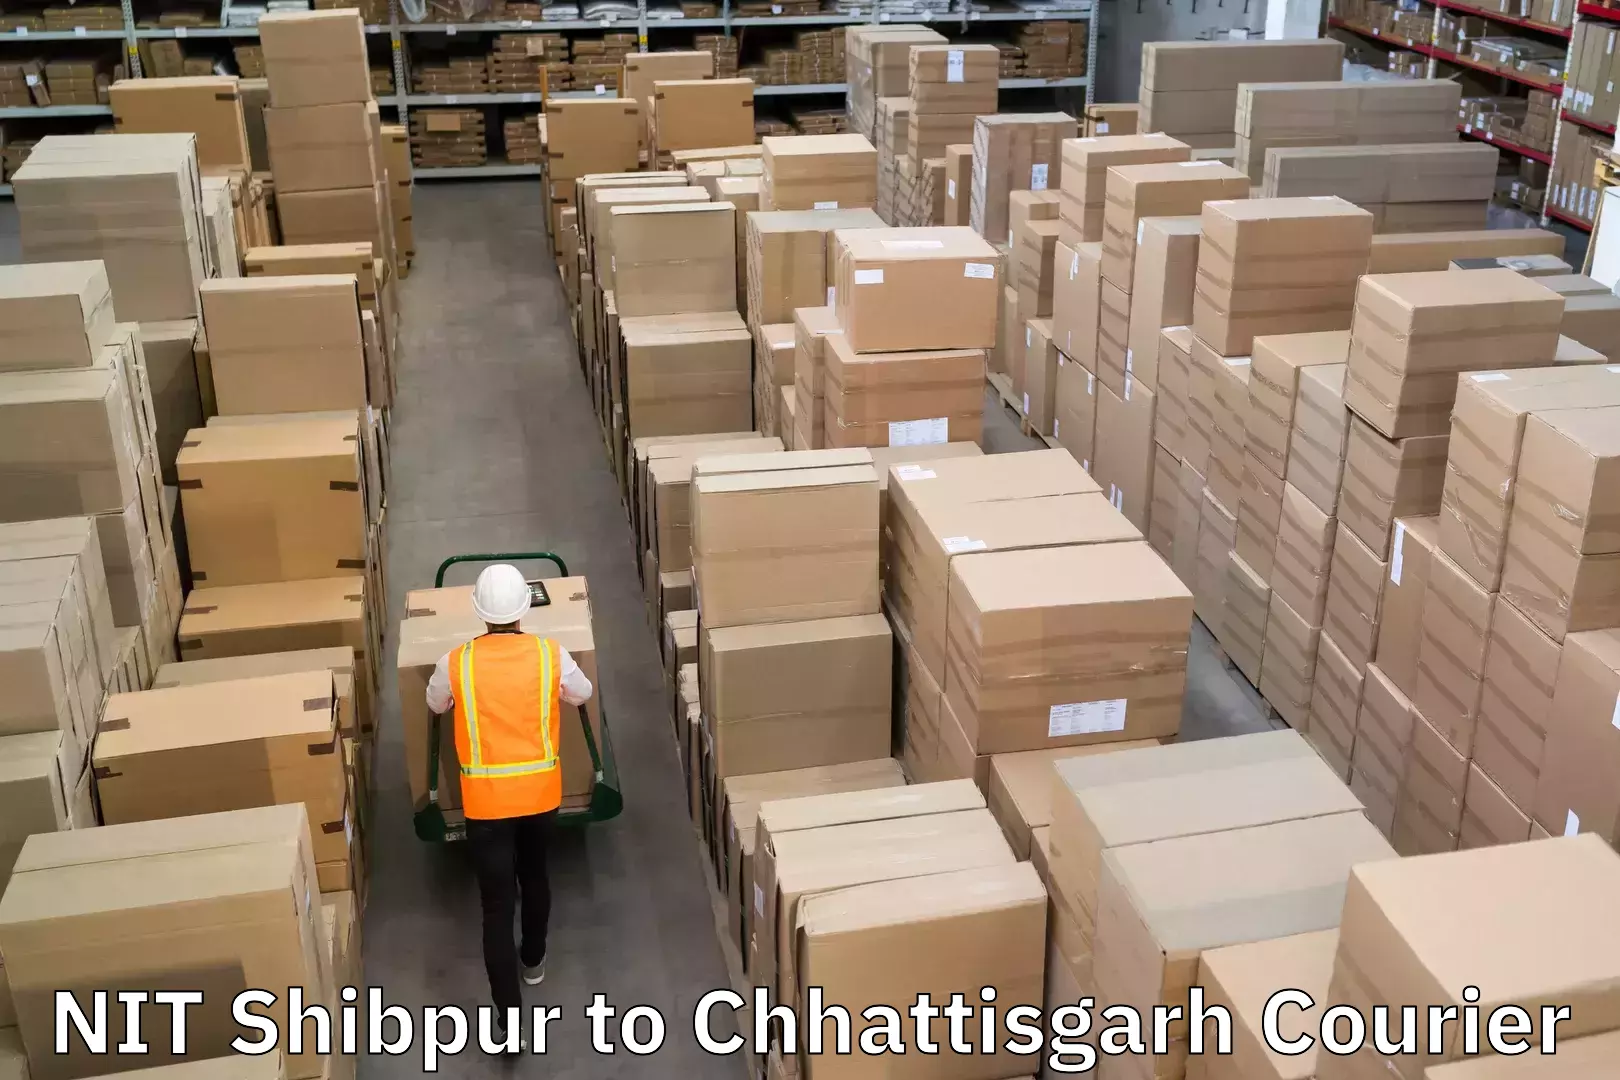 Professional courier handling NIT Shibpur to Chhattisgarh